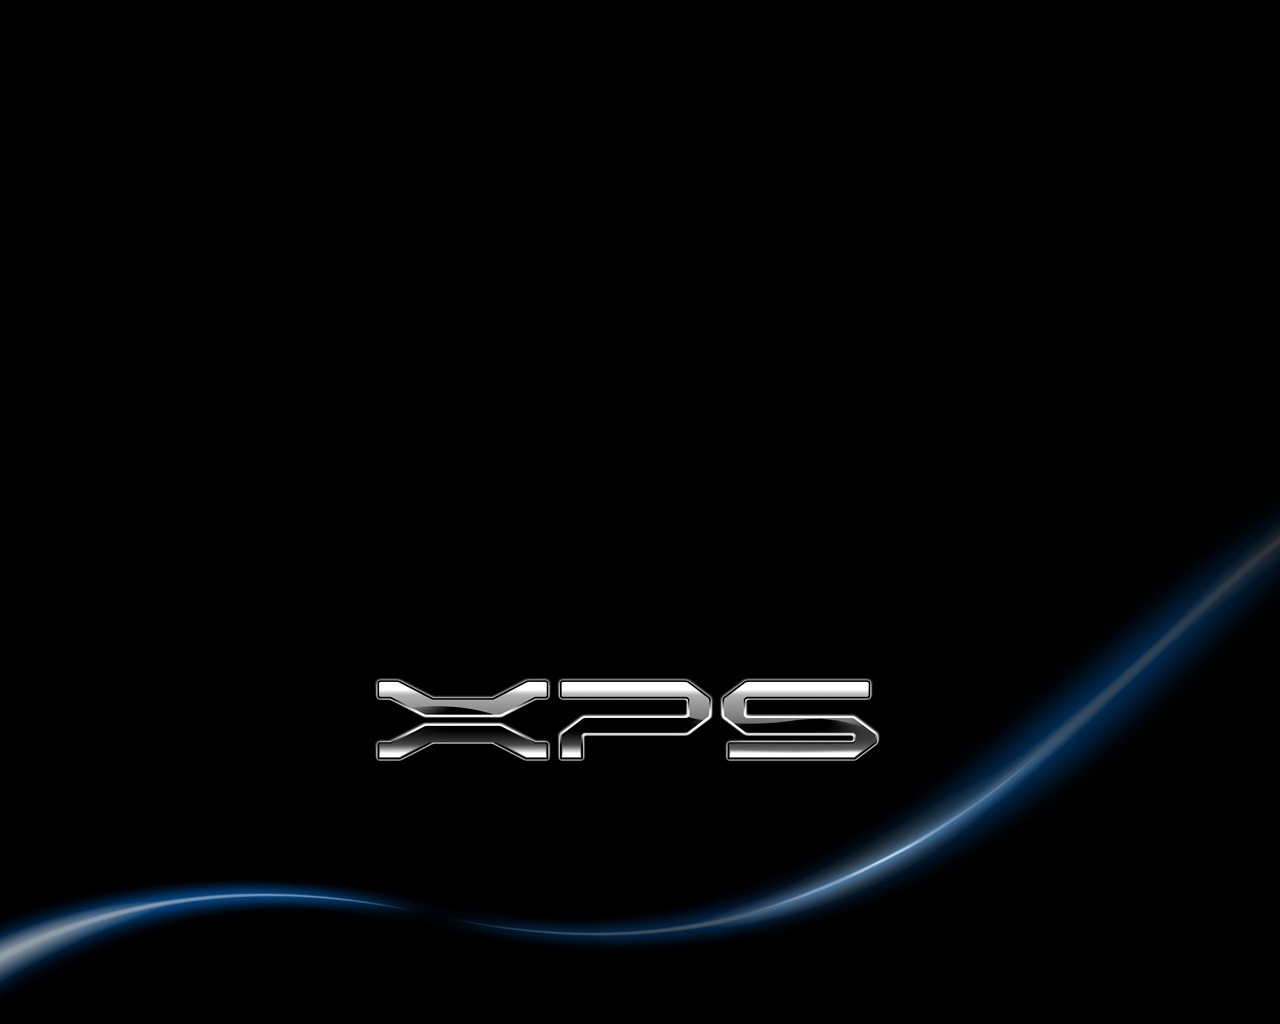 Dell XPS gaming blue 1280 x 1024 Wallpaper